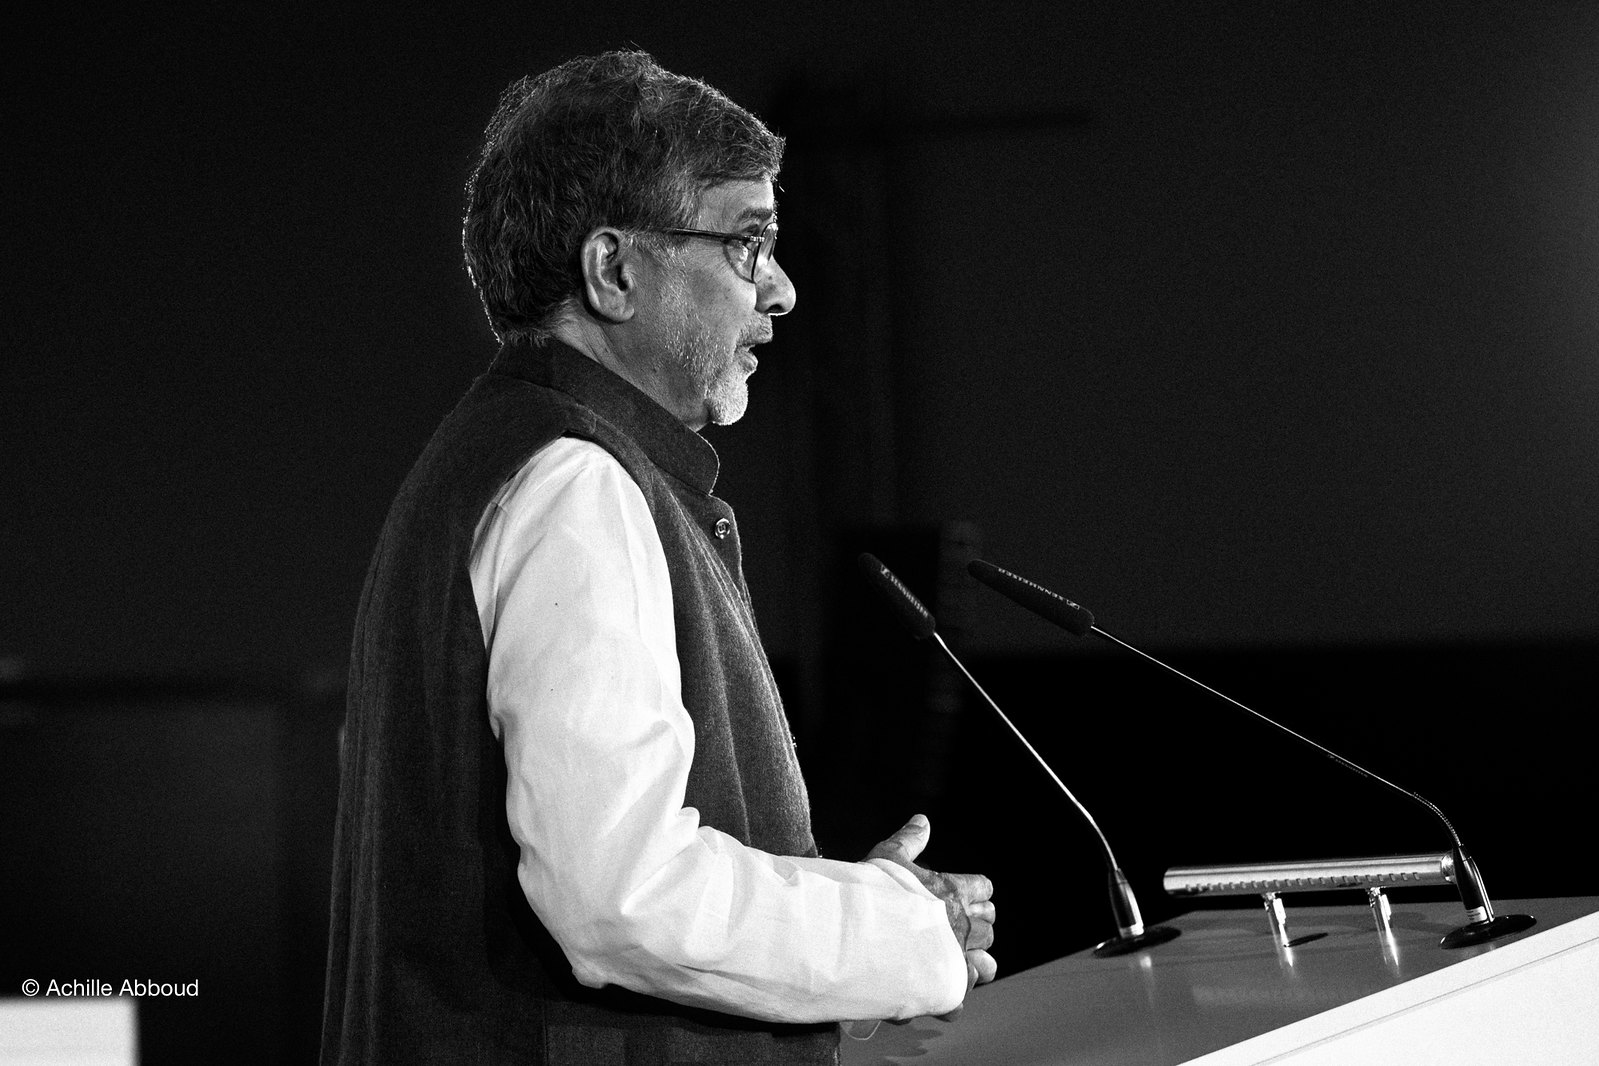 Kailash Satyarthi | the corecipient of the Nobel Peace Prize 2014